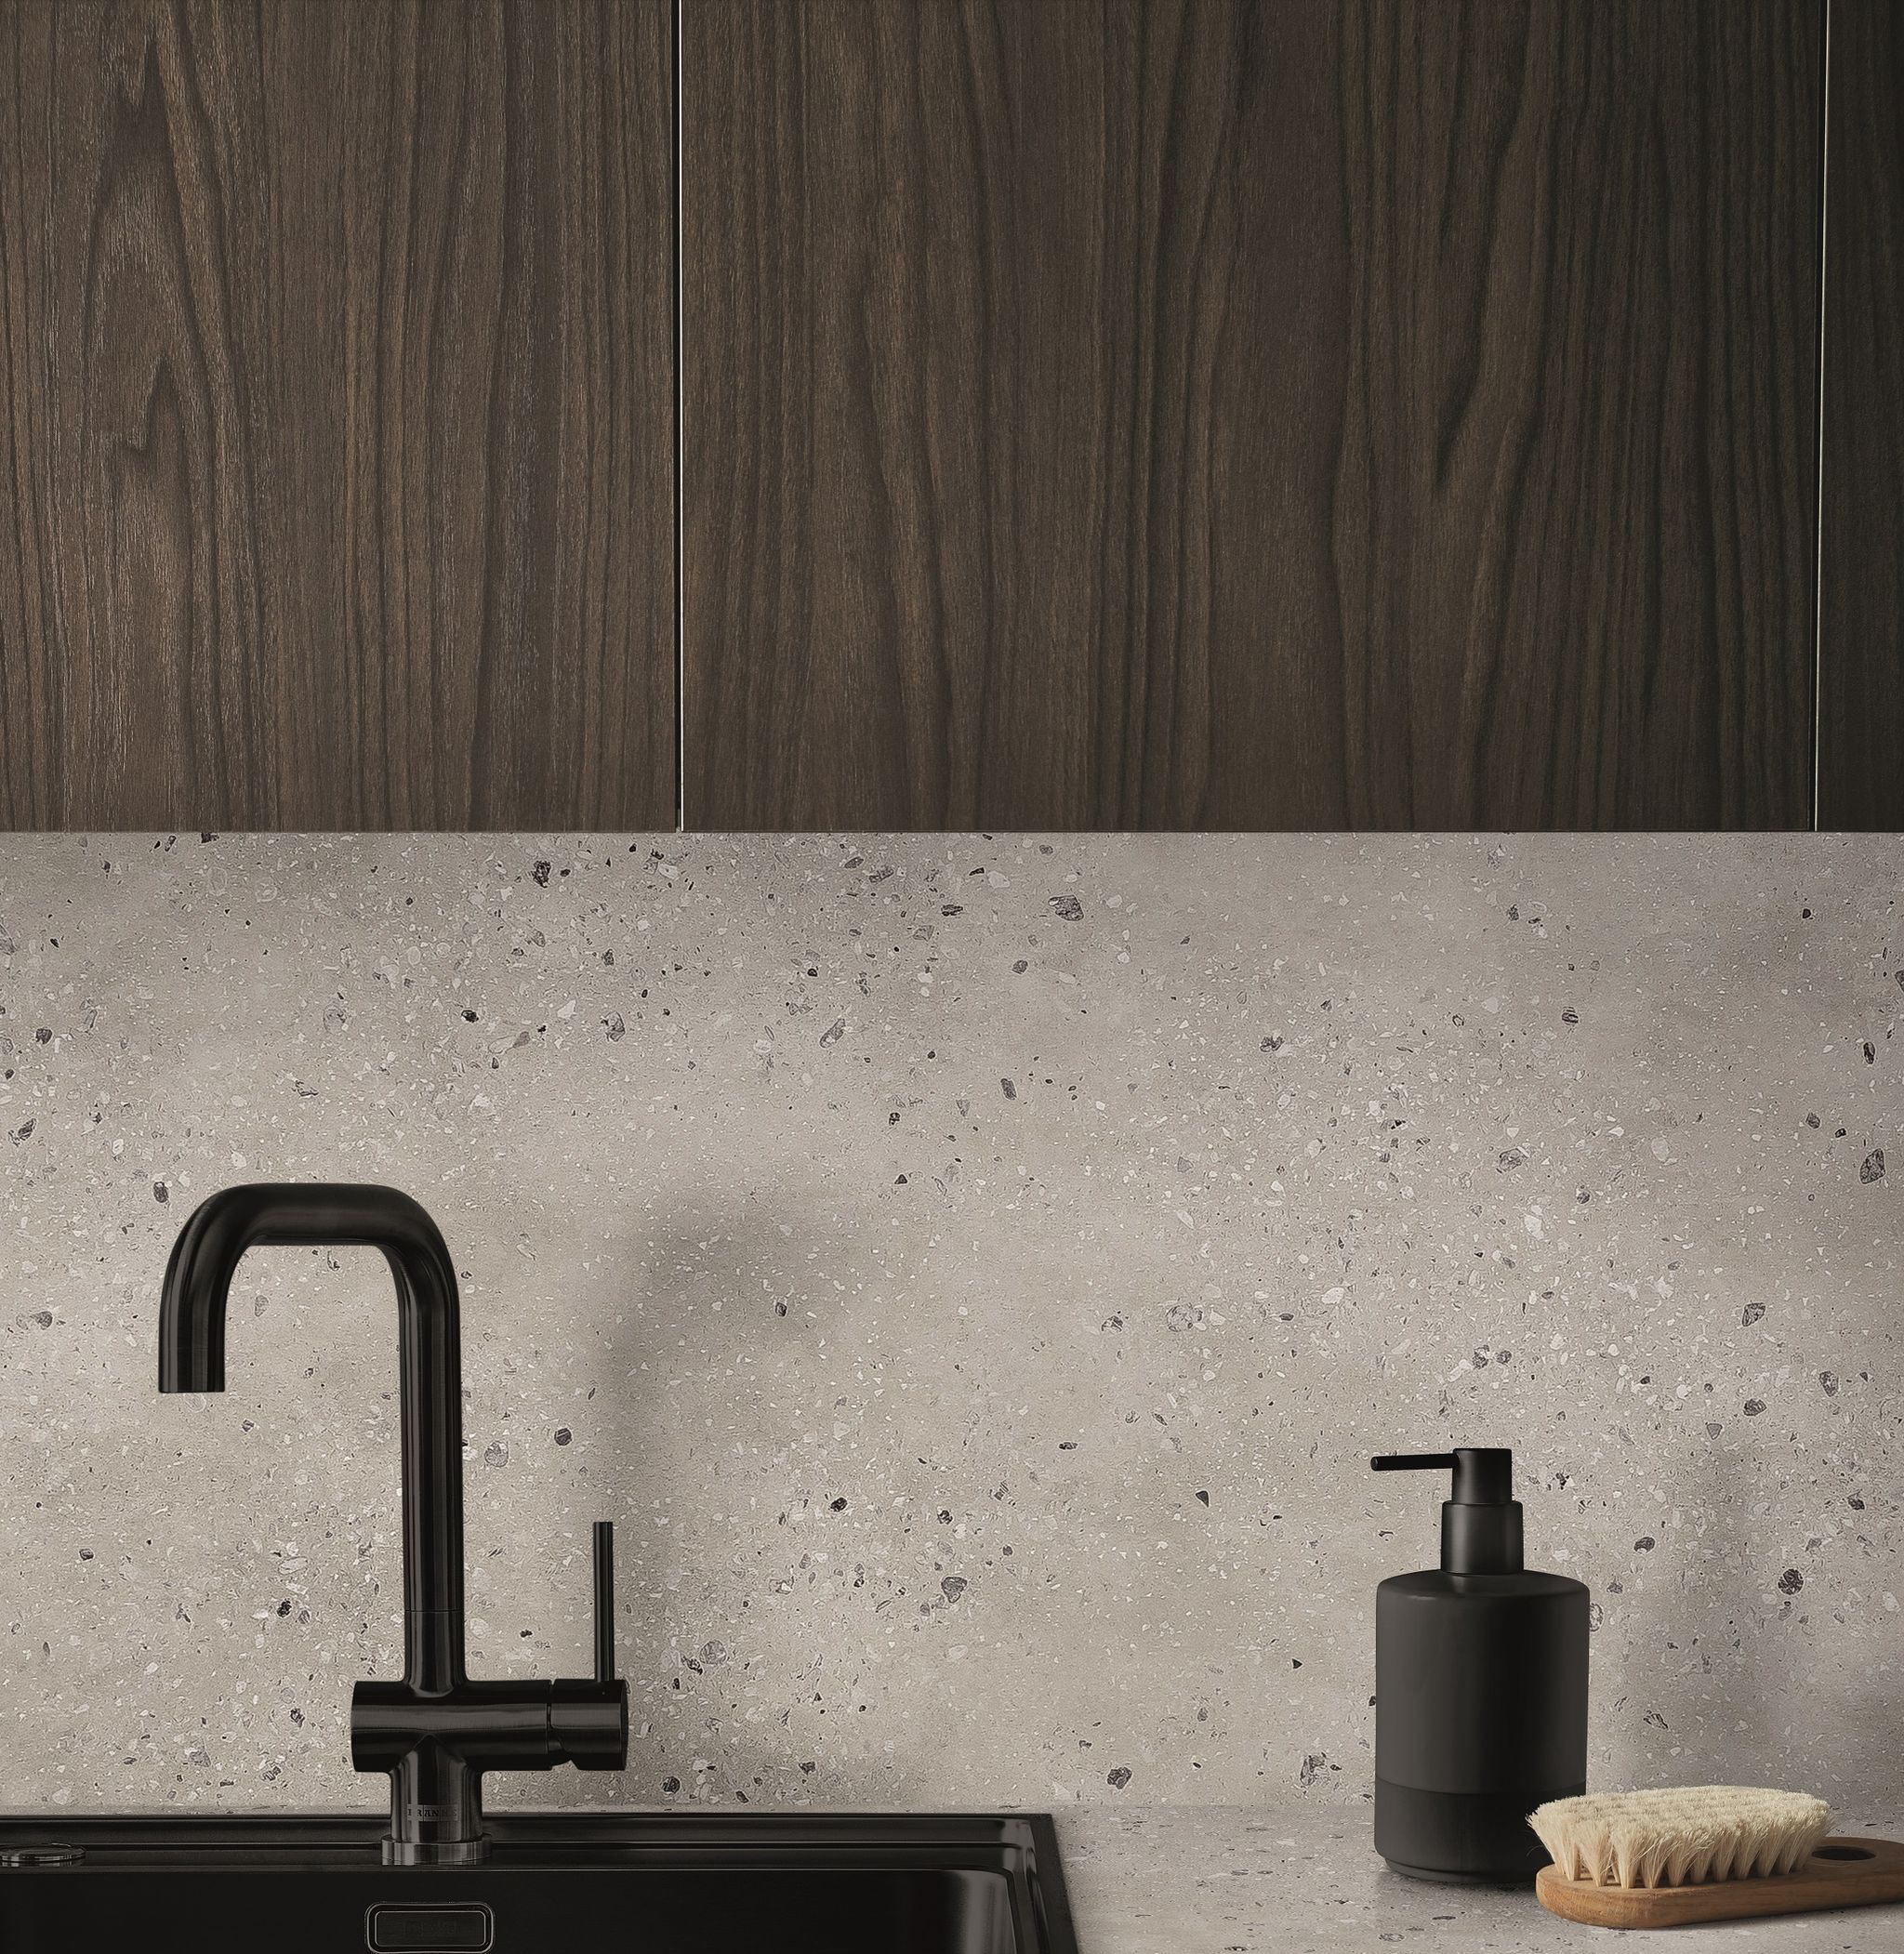 Large Granite Chopping Board Speckled Stone Worktop Saver Kitchen Top -  Black